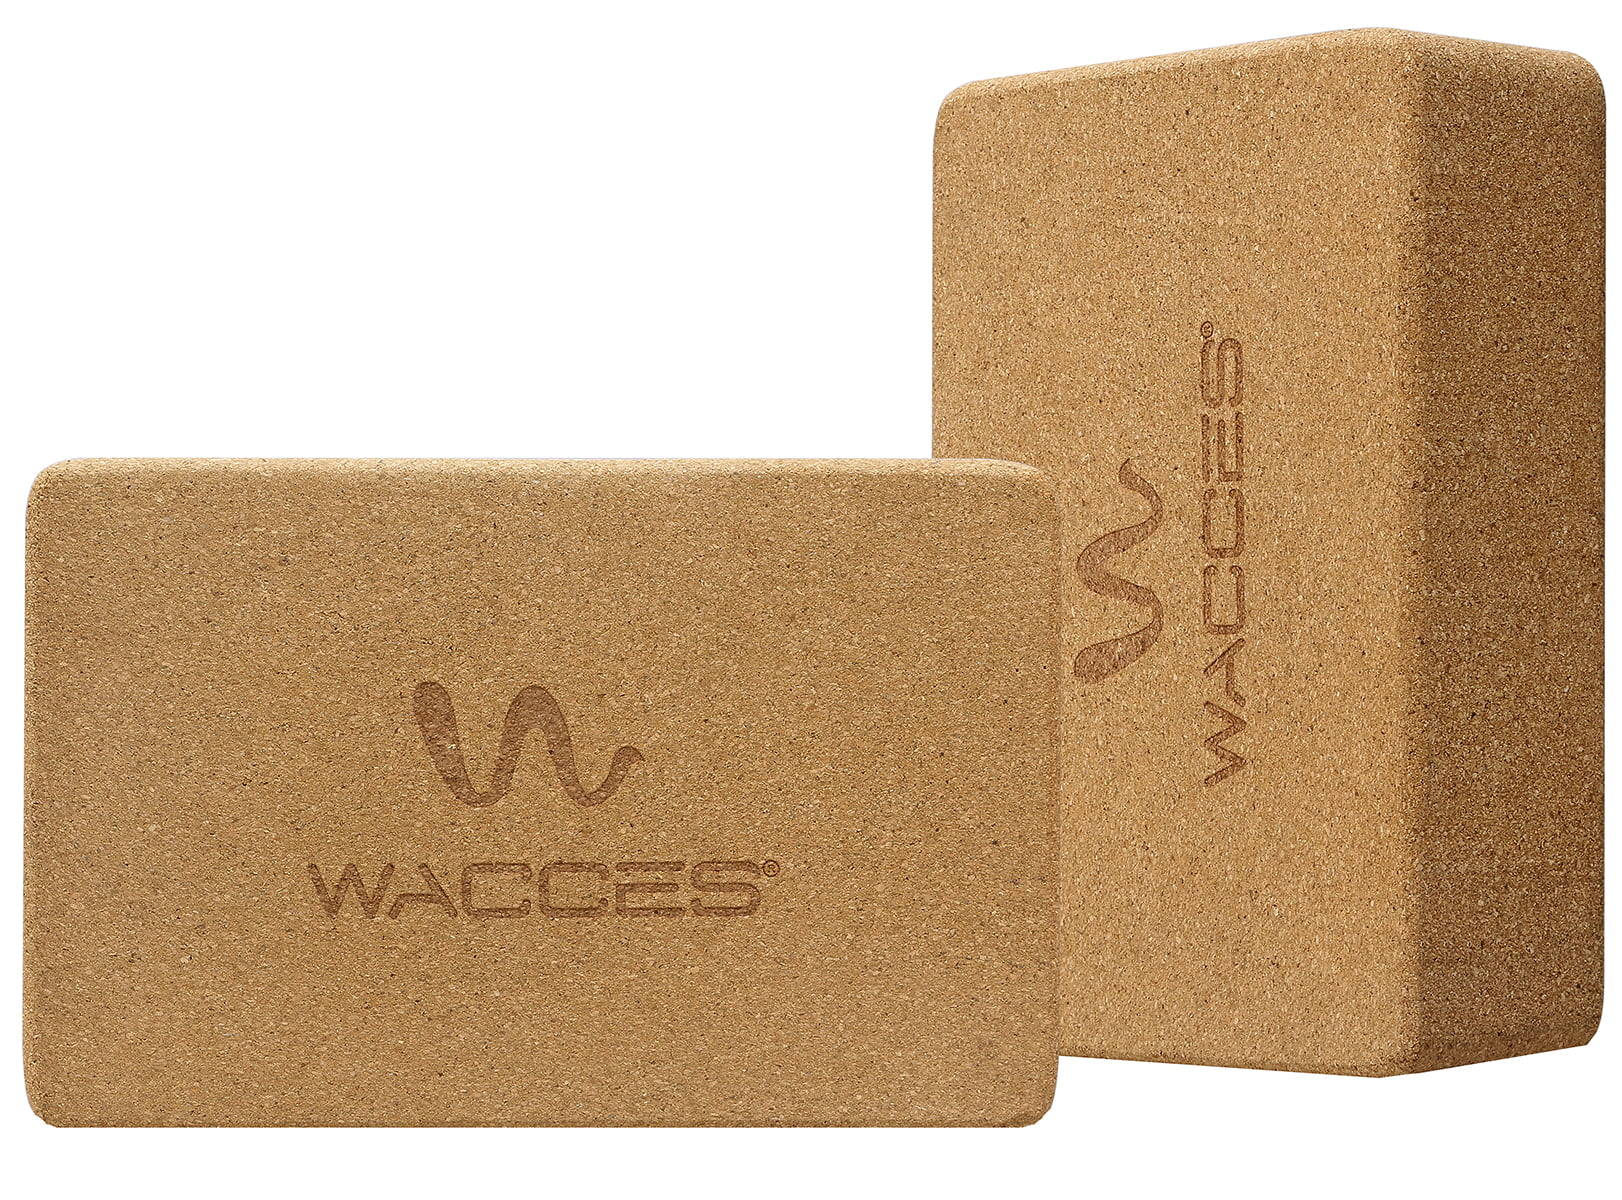 Set of 2 Wacces Foam Exercise Fitness & Yoga Blocks